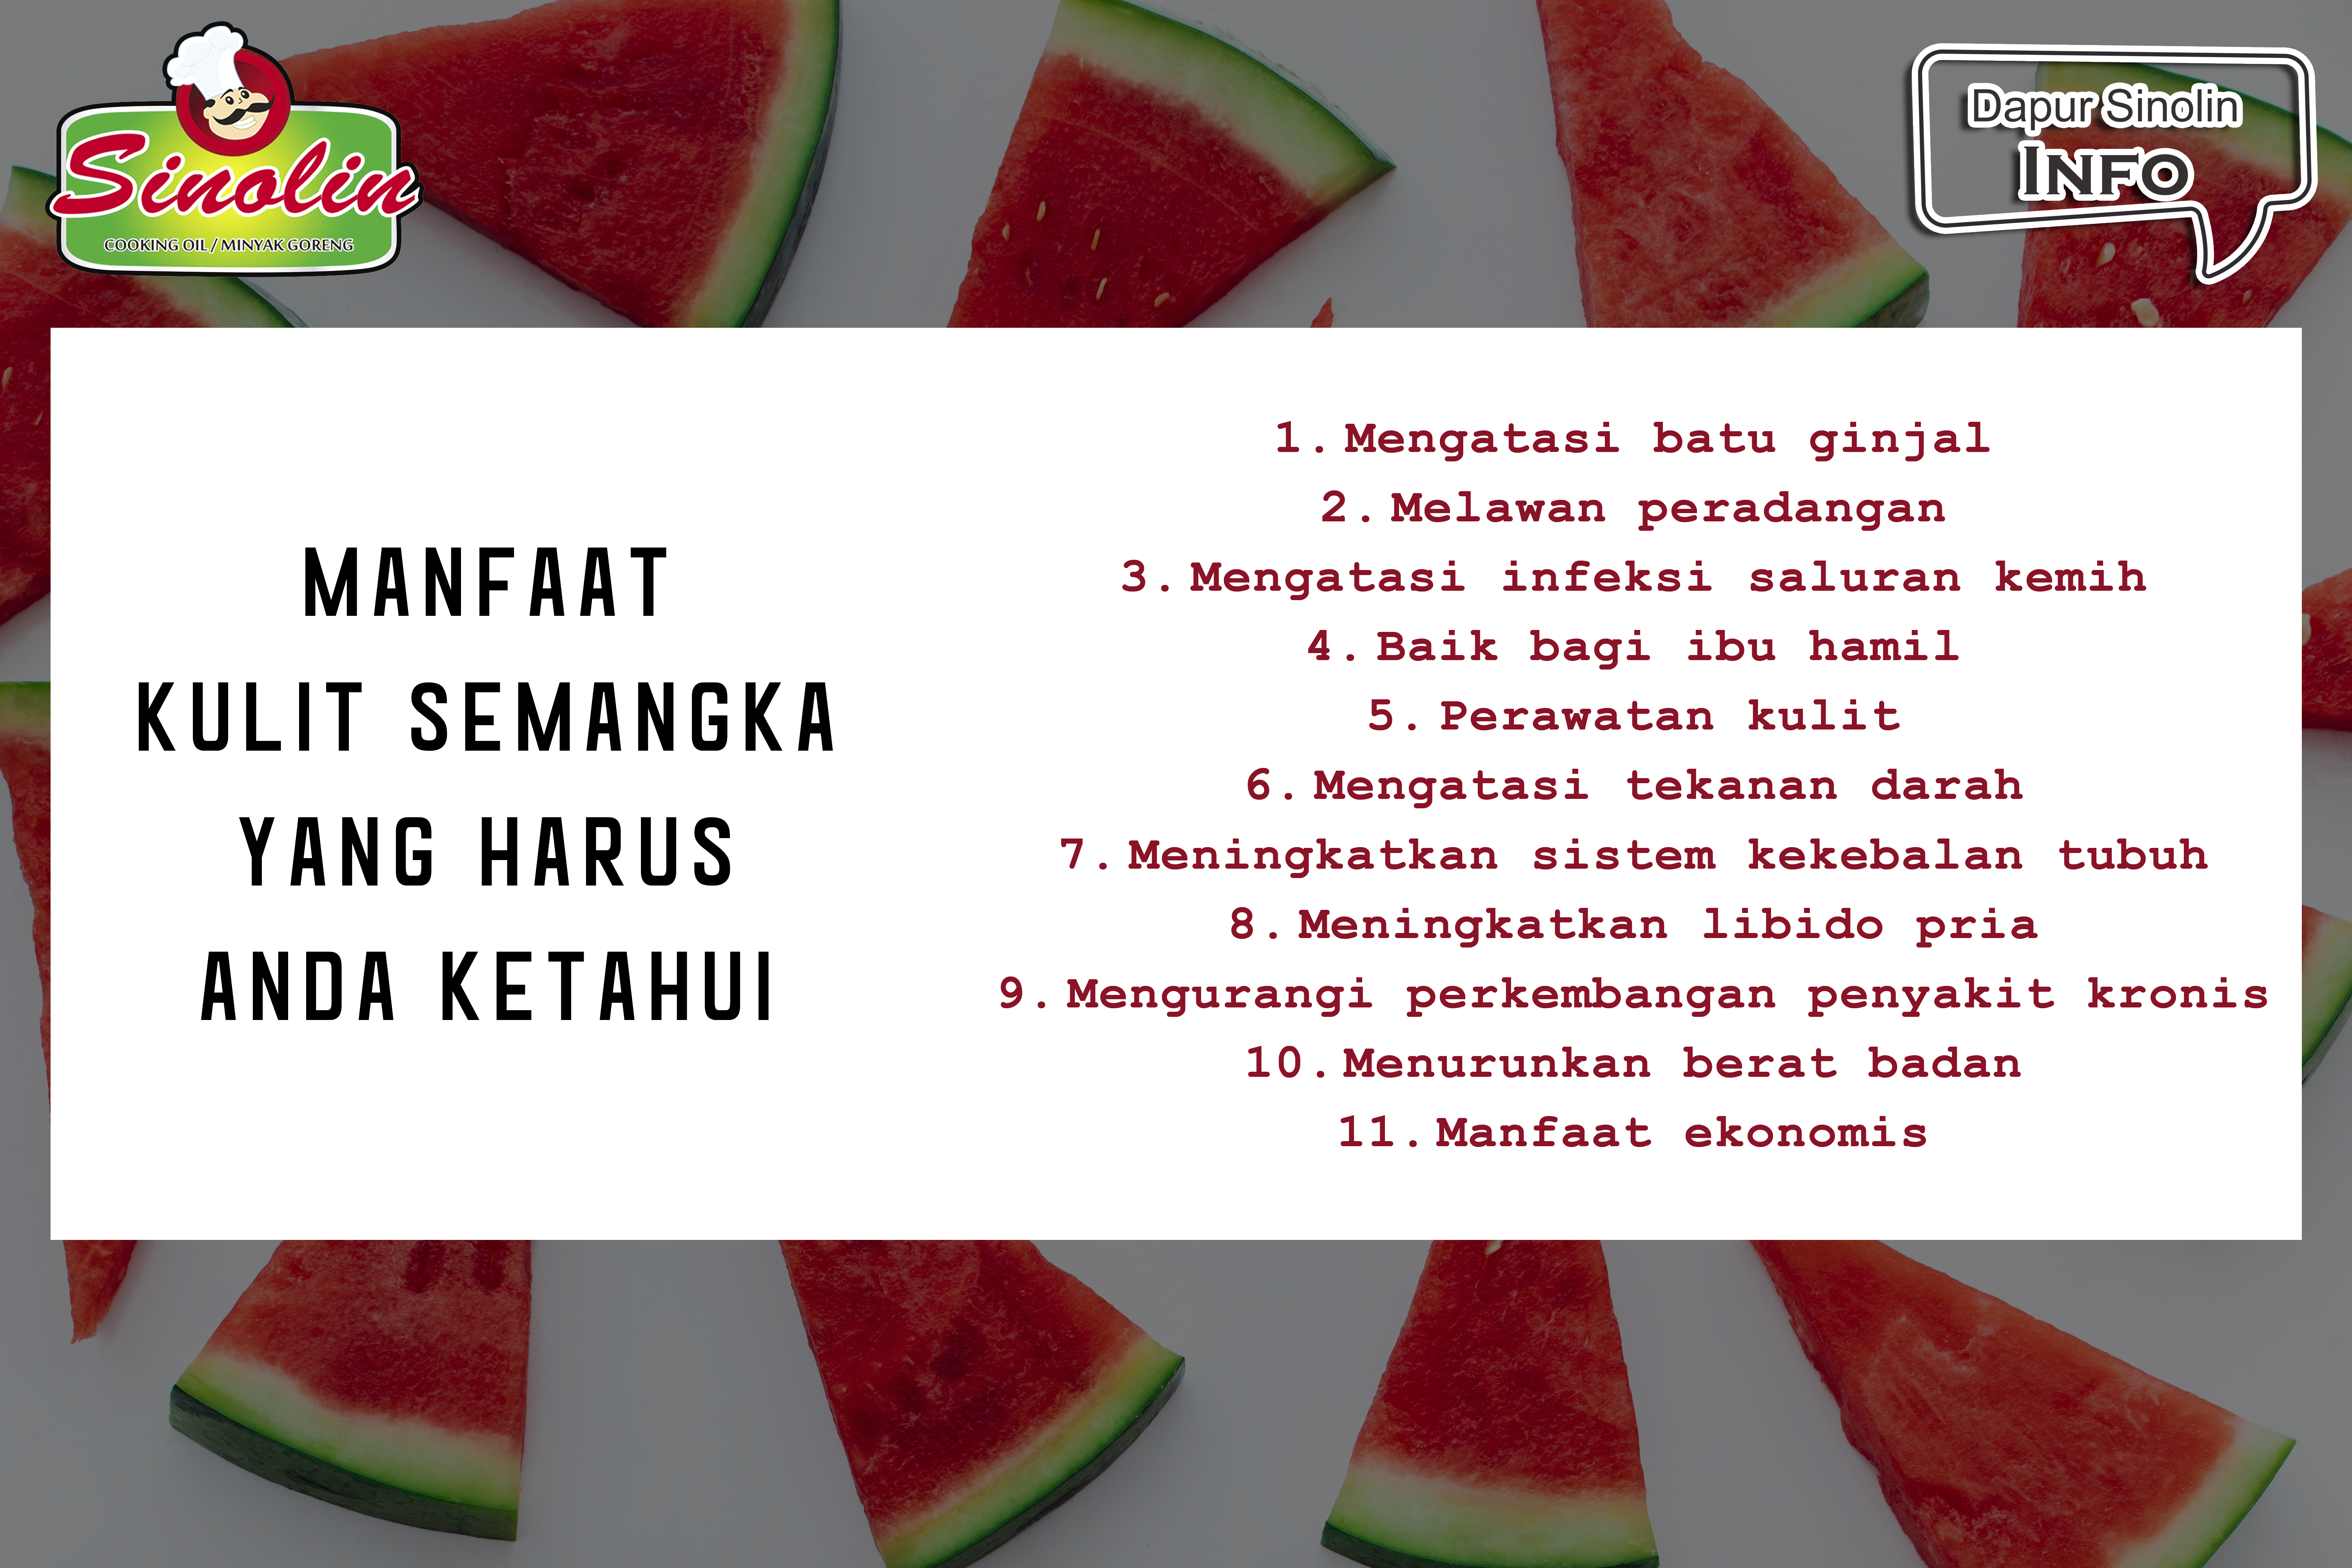 Info: Benefits of Watermelon Skin By Dapur Sinolin